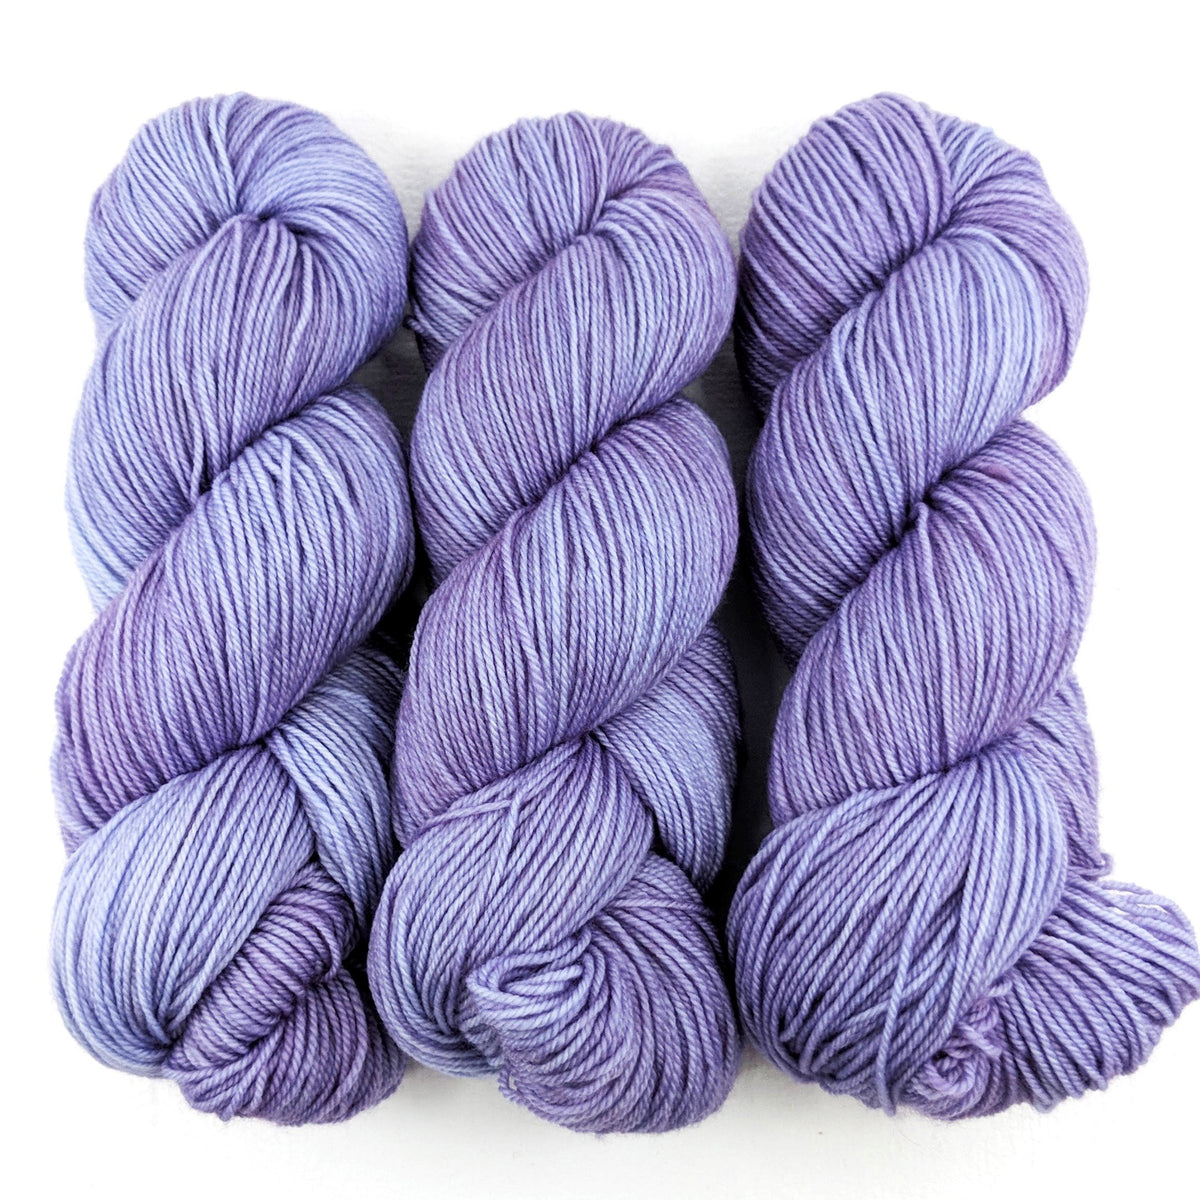 English Lavender - Nettle Soft DK - Dyed Stock